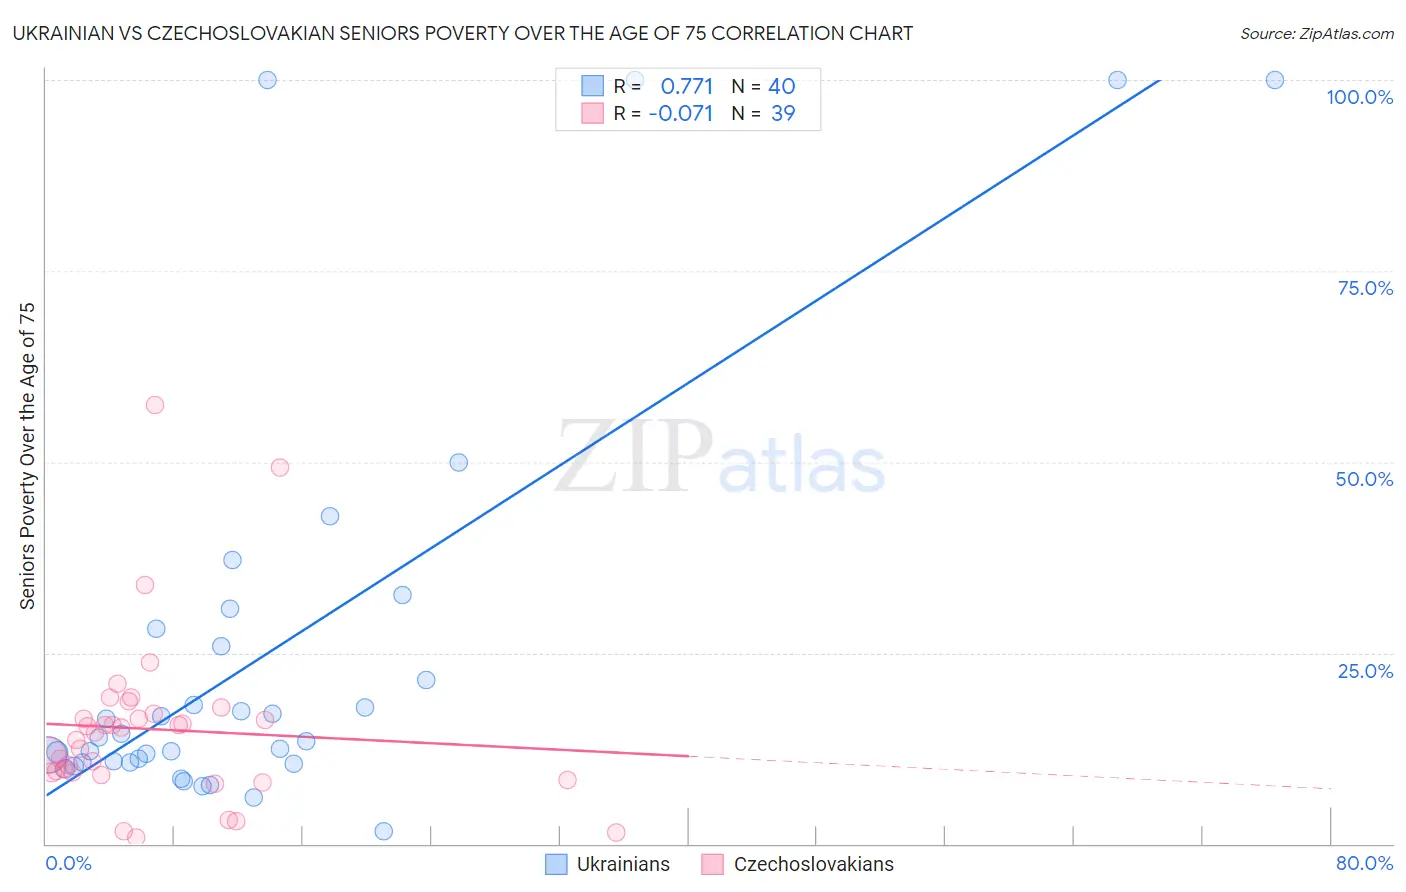 Ukrainian vs Czechoslovakian Seniors Poverty Over the Age of 75